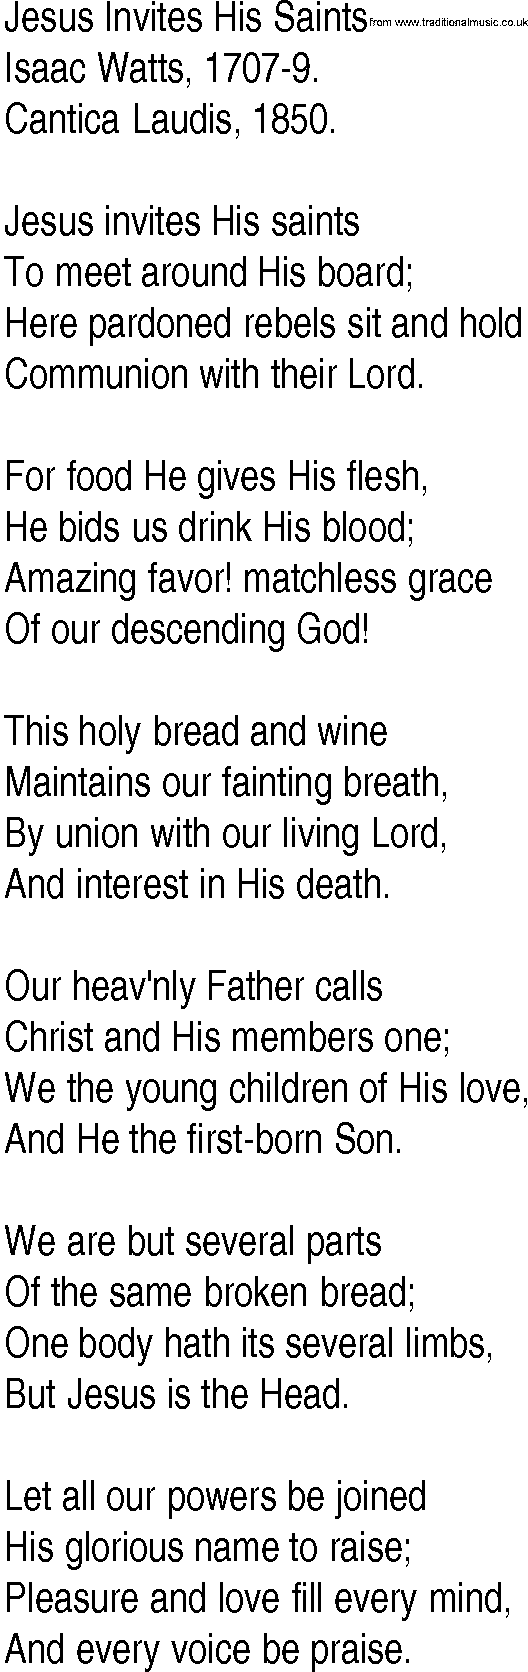 Hymn and Gospel Song: Jesus Invites His Saints by Isaac Watts lyrics